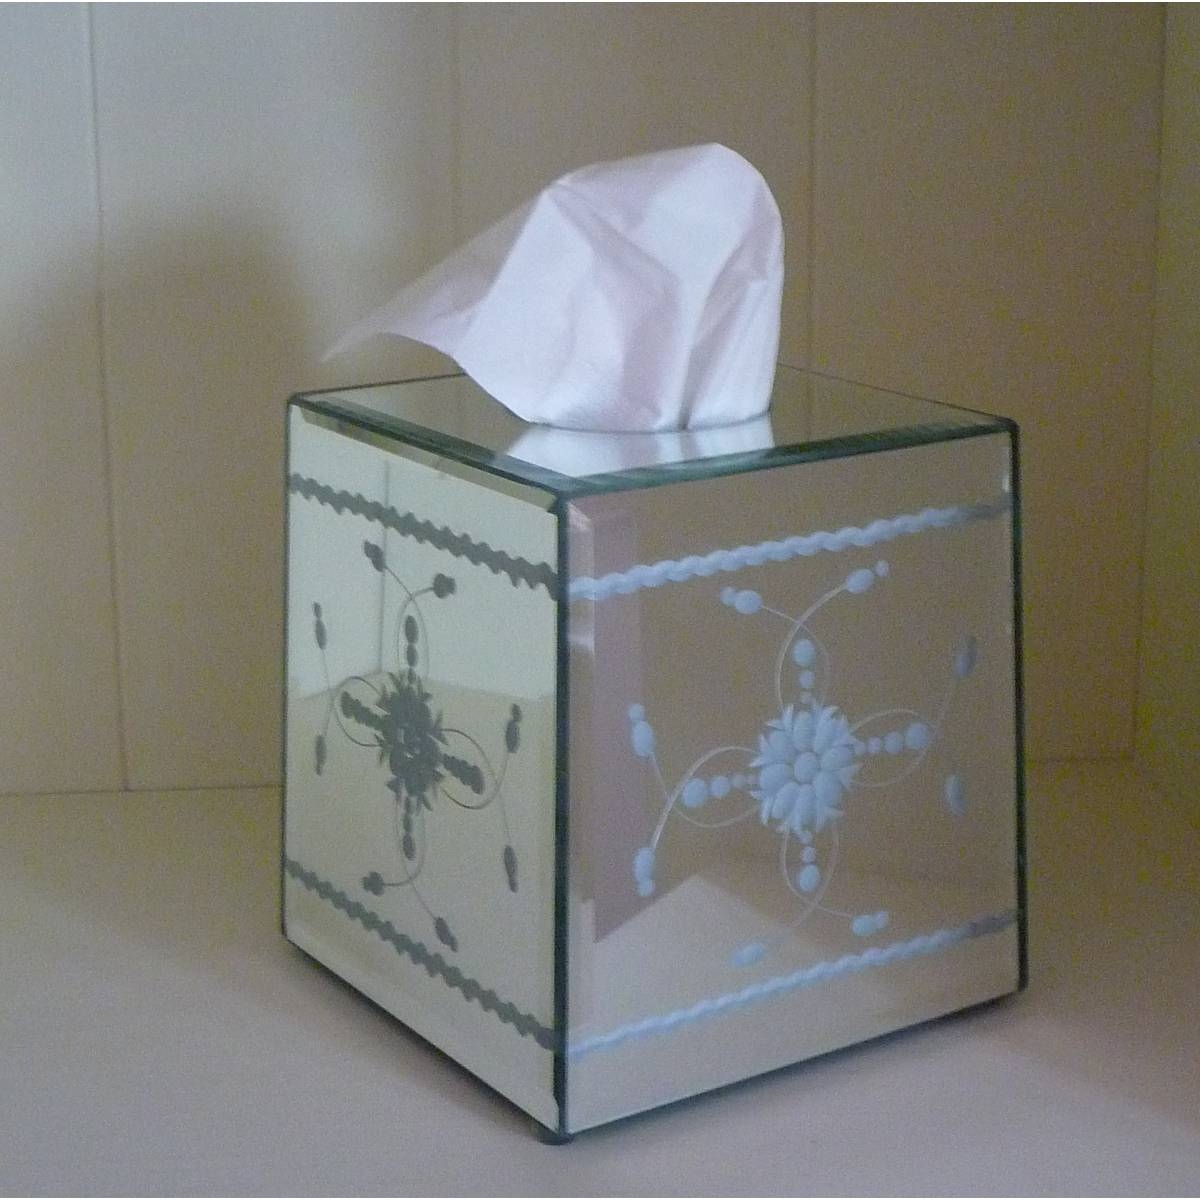 square tissue box cover uk